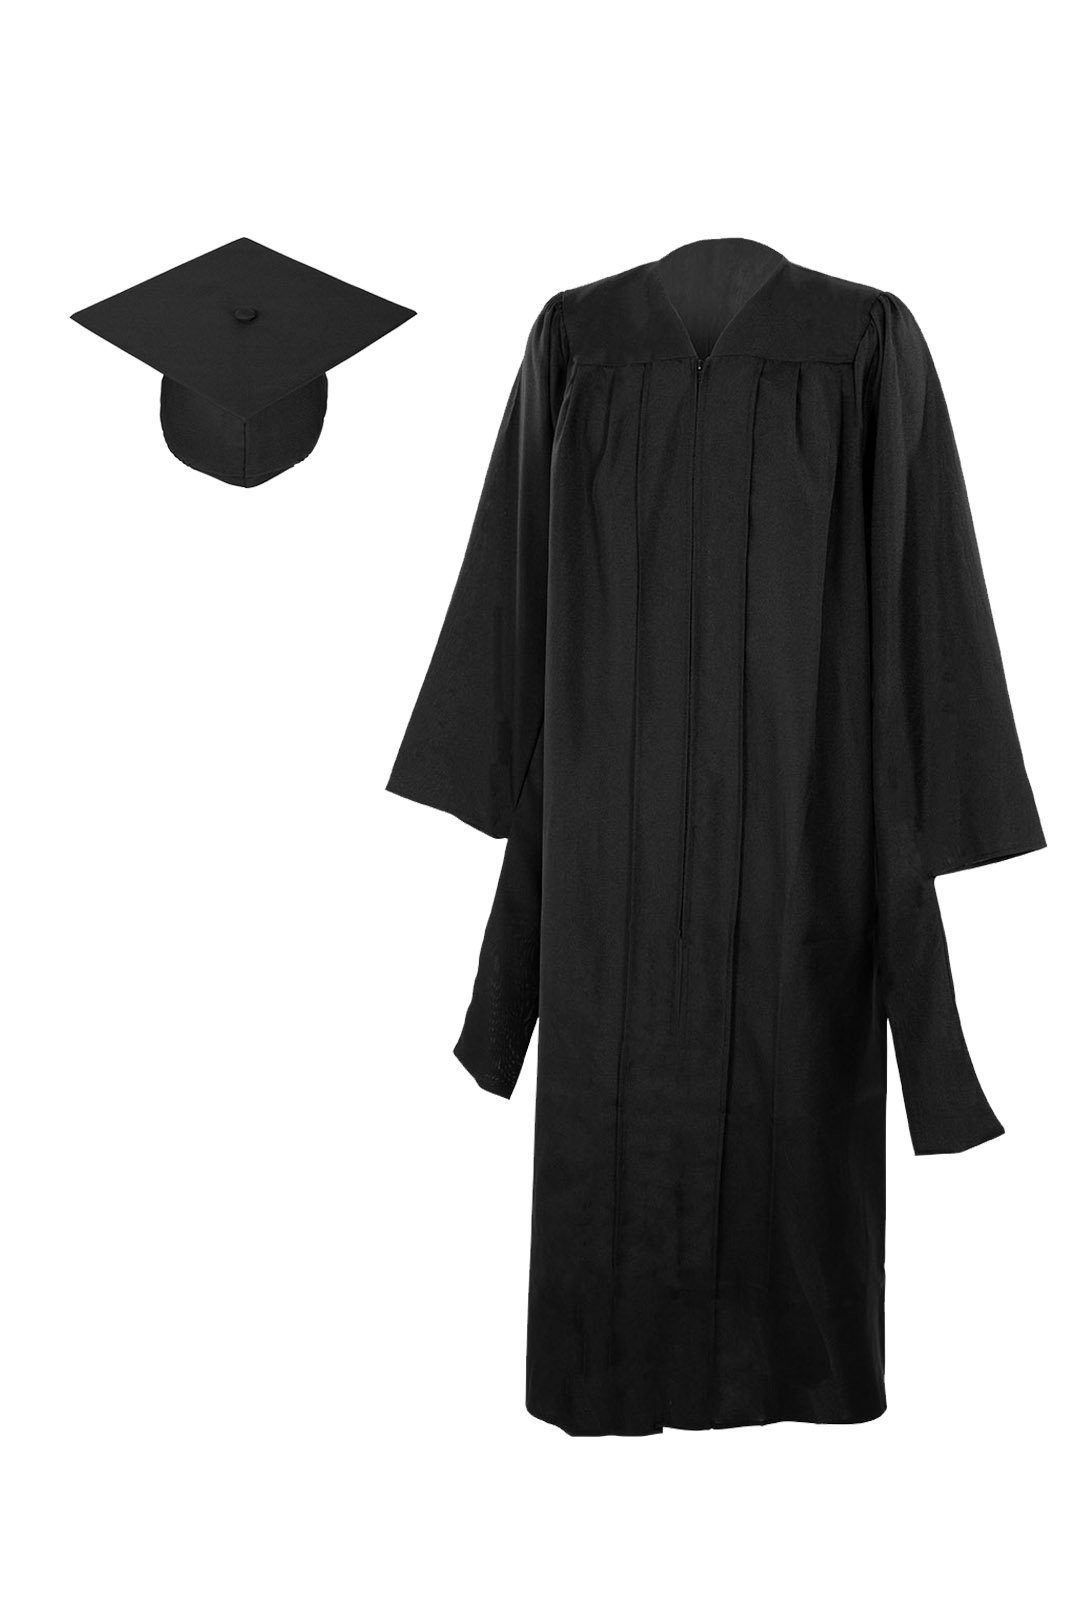 Classic Master Academic Cap & Gown - Graduation SuperStore